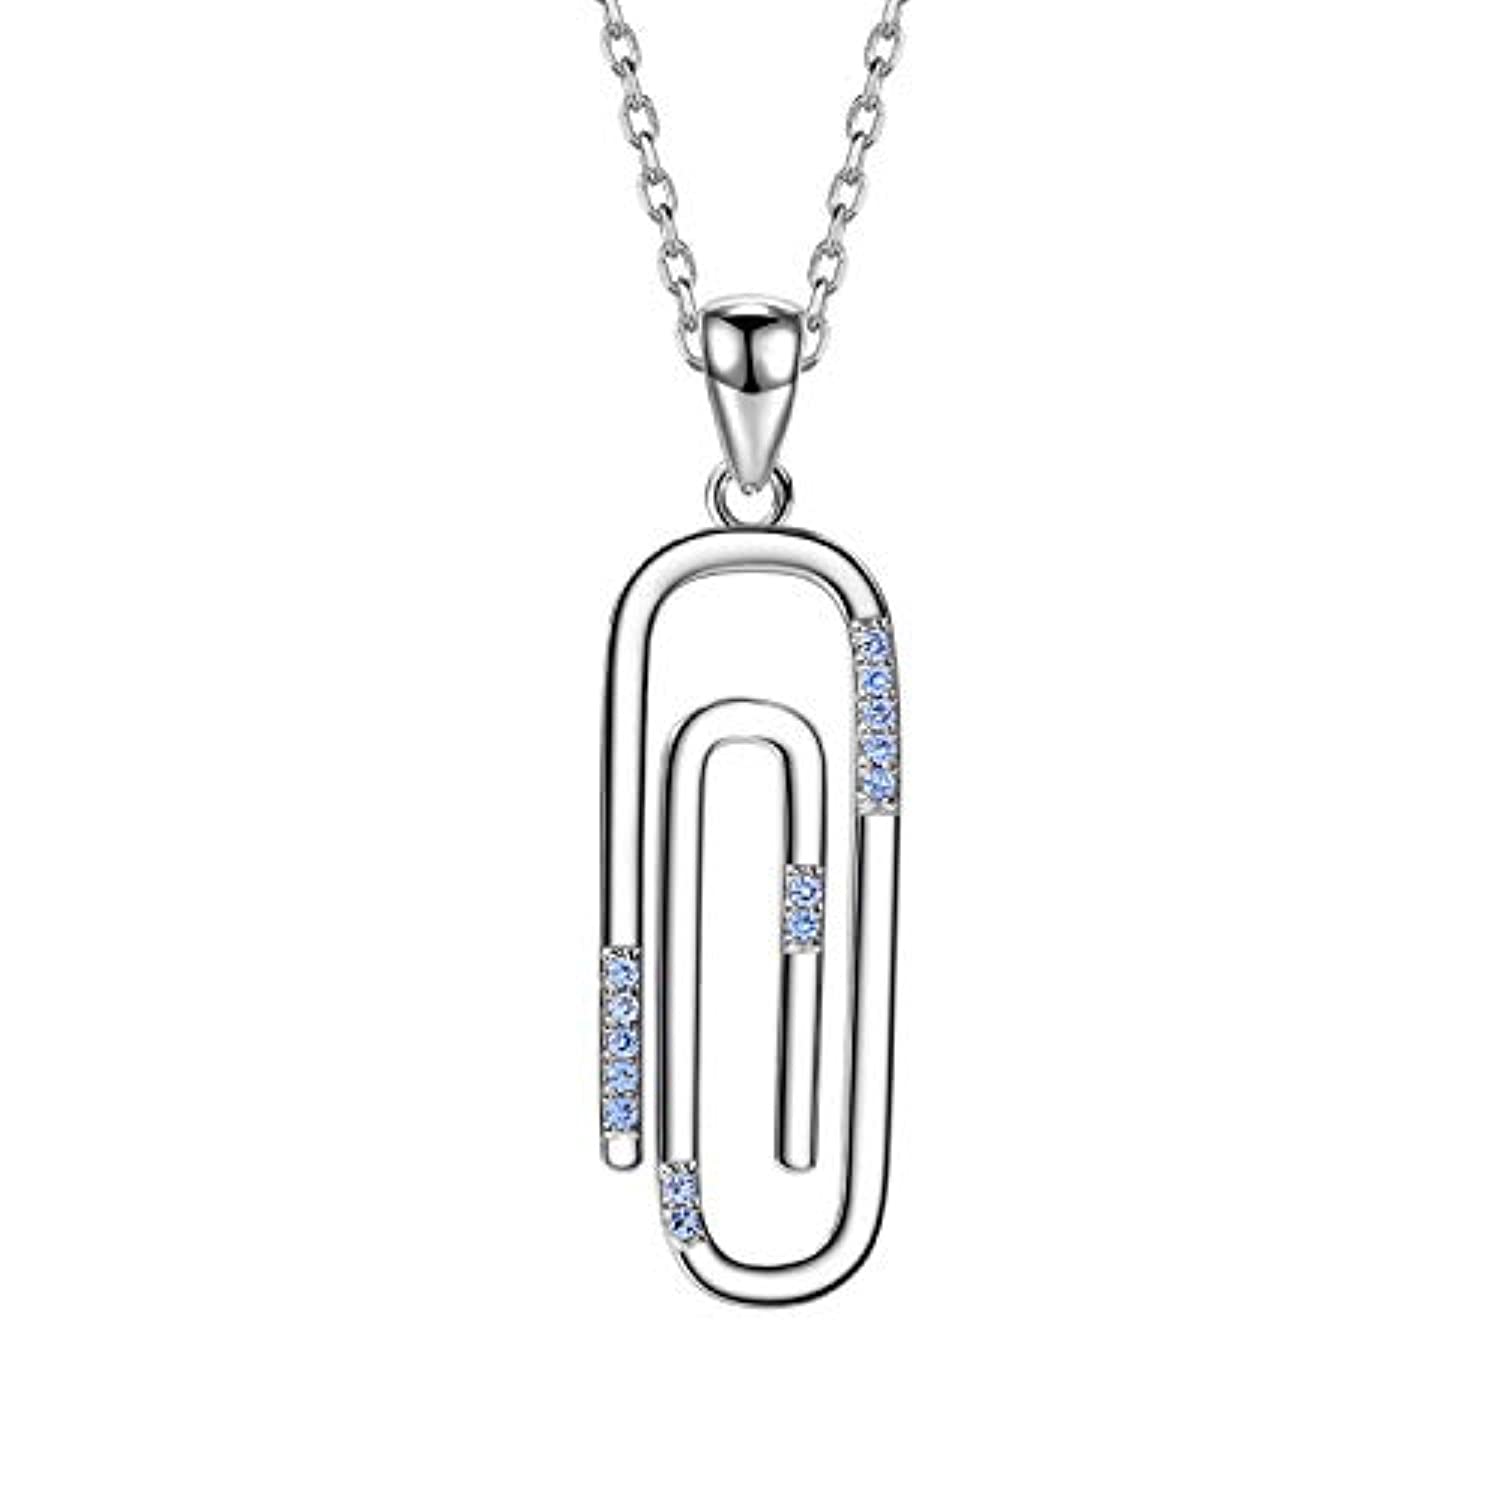 Tiffany Hardwear Link Necklace - For Sale on 1stDibs | tiffany hardwear  necklace, tiffany hardwear necklace price, tiffany hardwear graduated link  necklace